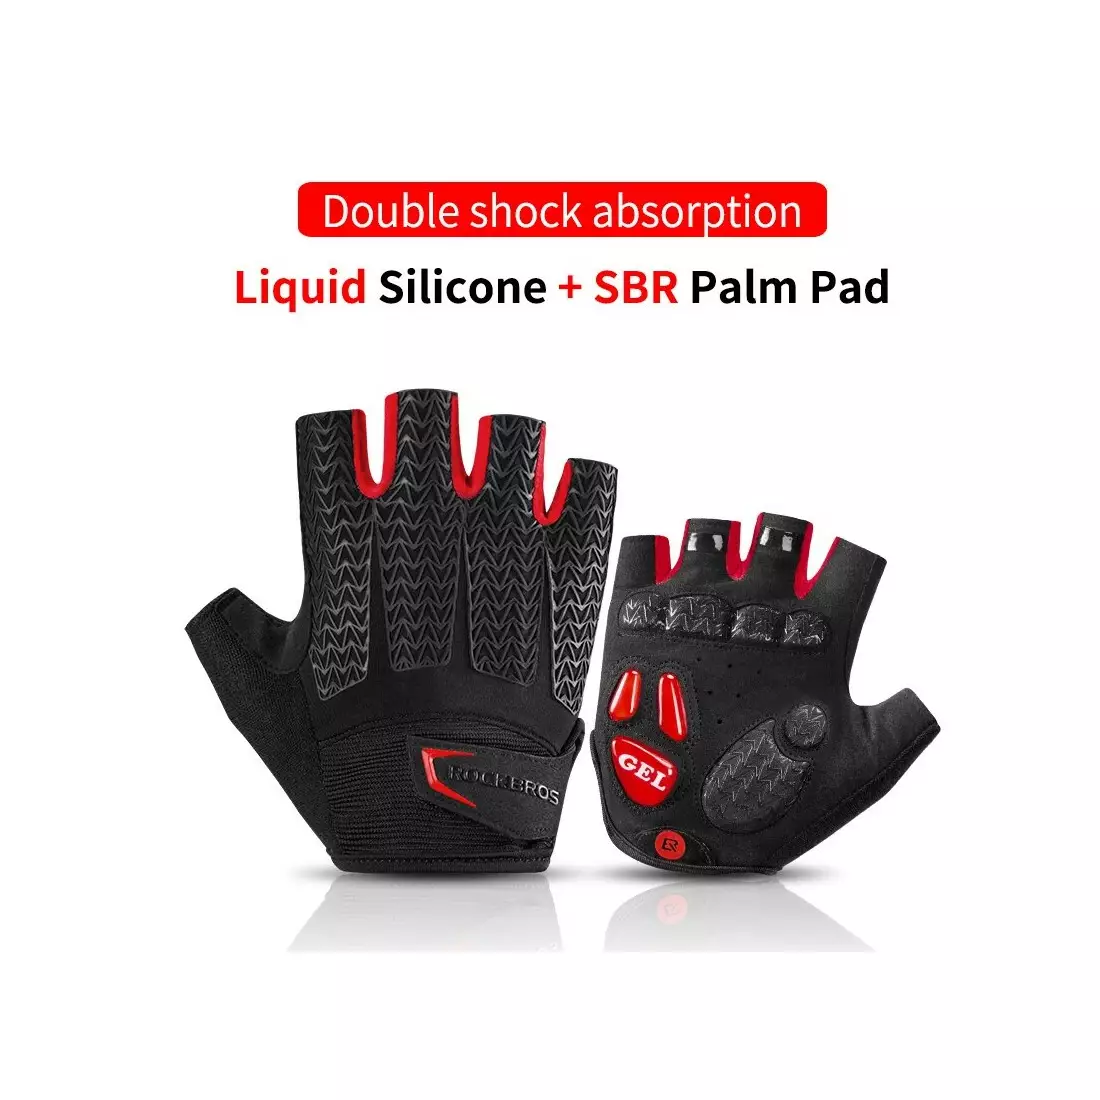 Rockbros cycling gloves short finger, schwarz-red S169BR